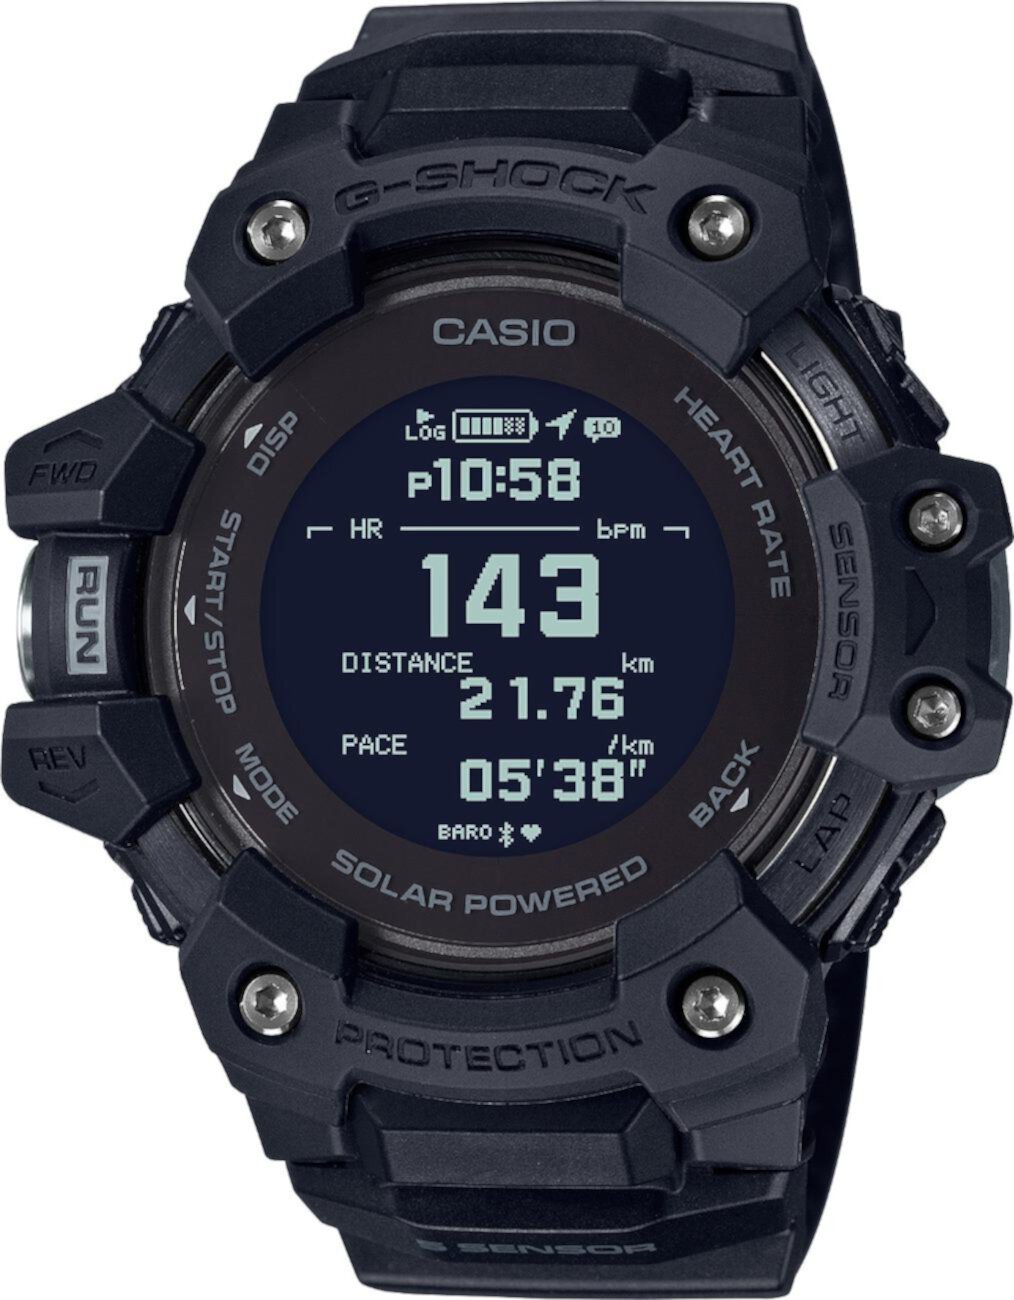 Часы G-Shock Move HR с GPS Casio